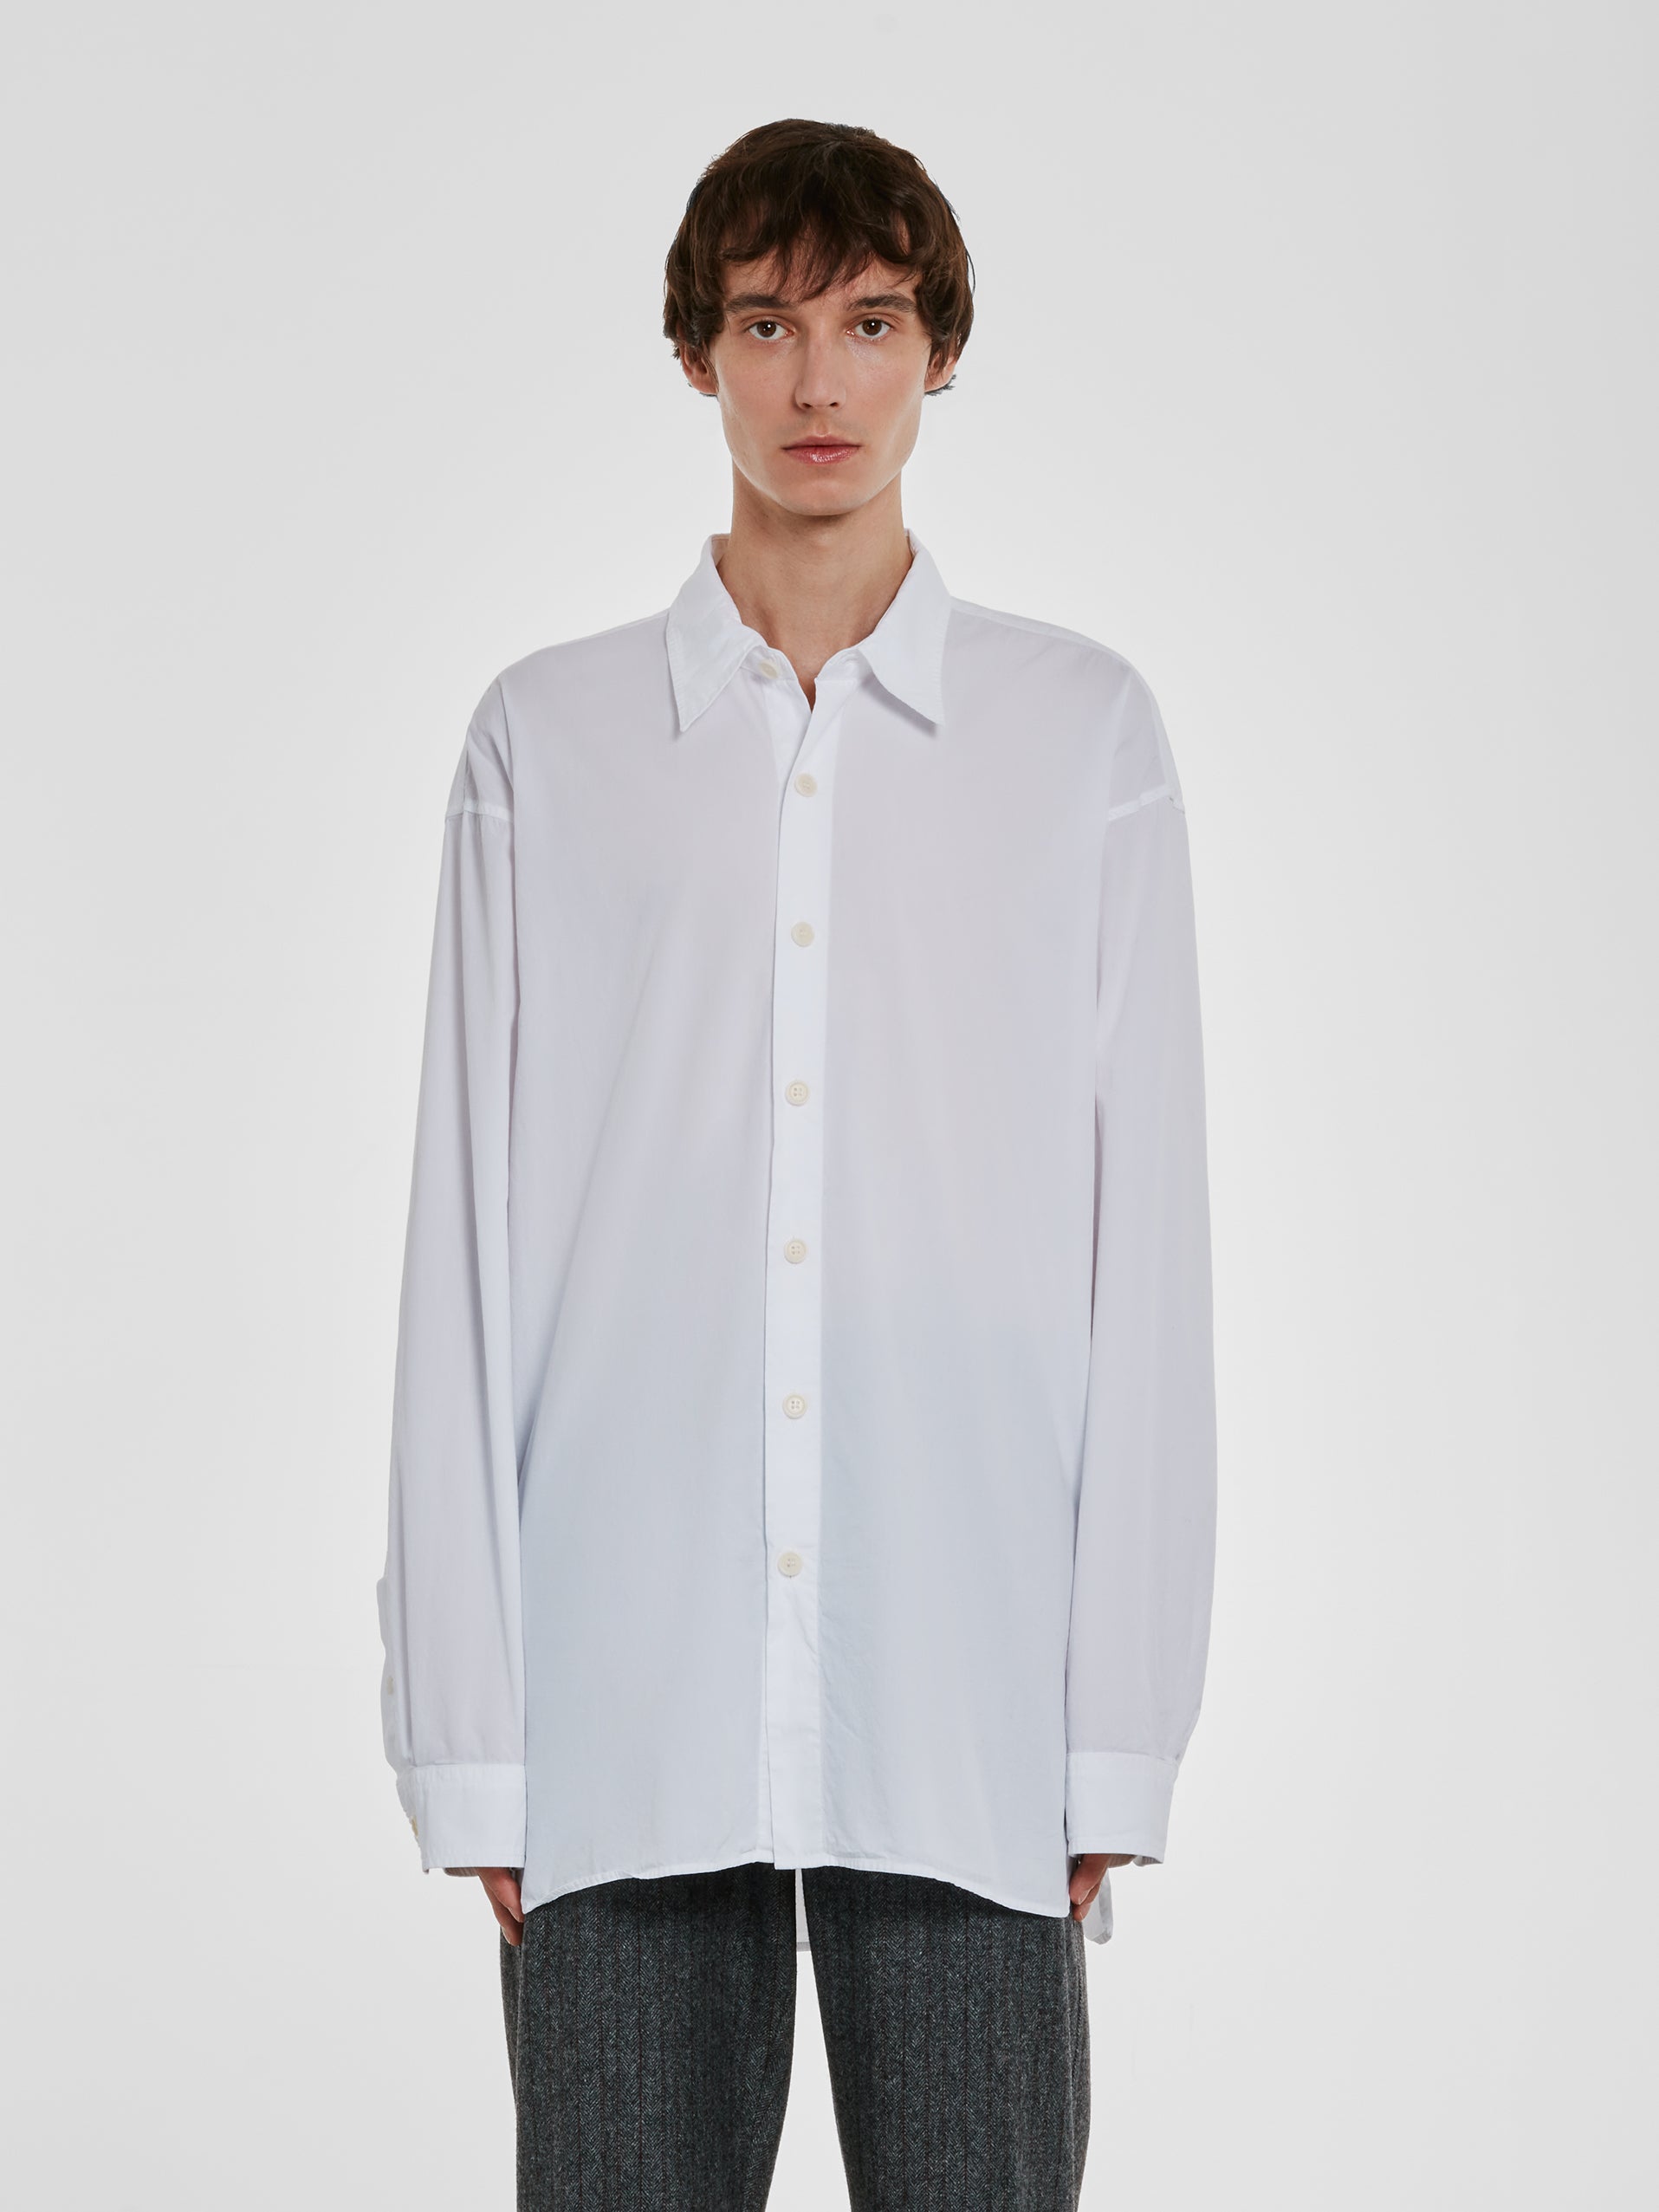 Dries Van Noten - Men’s Boxy Fit Shirt - (White) view 1